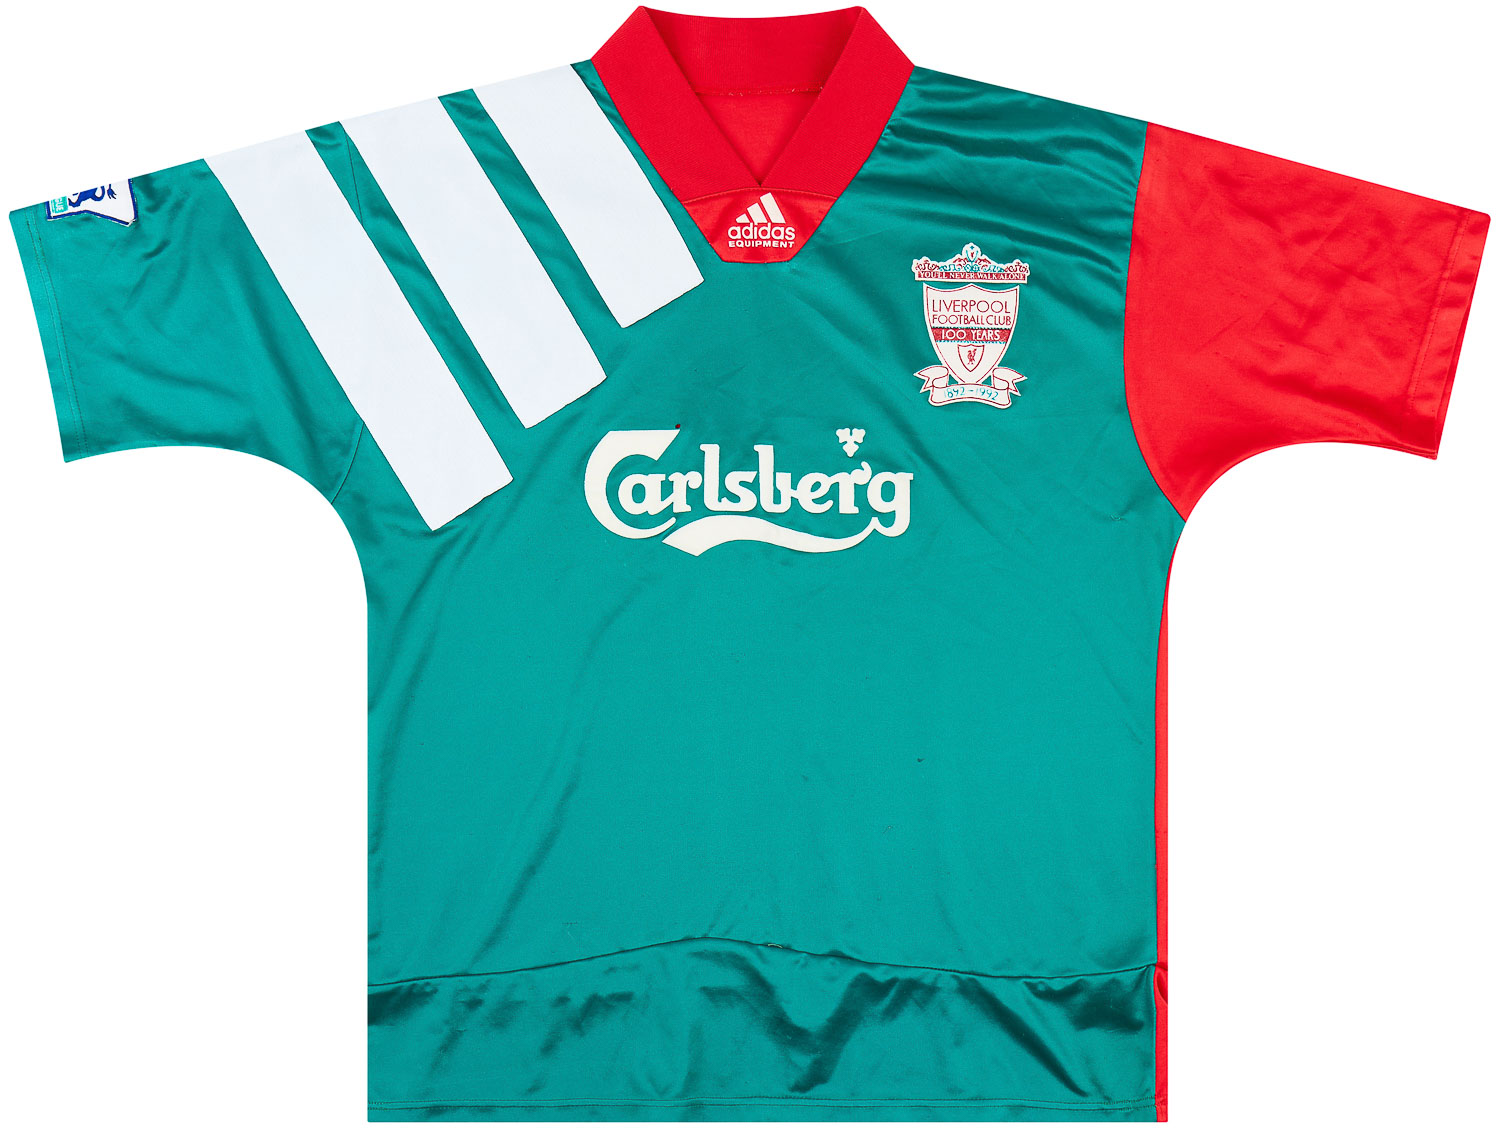 1992-93 Liverpool Centenary Away/Home Rework Shirt - Good 5/10 - ()